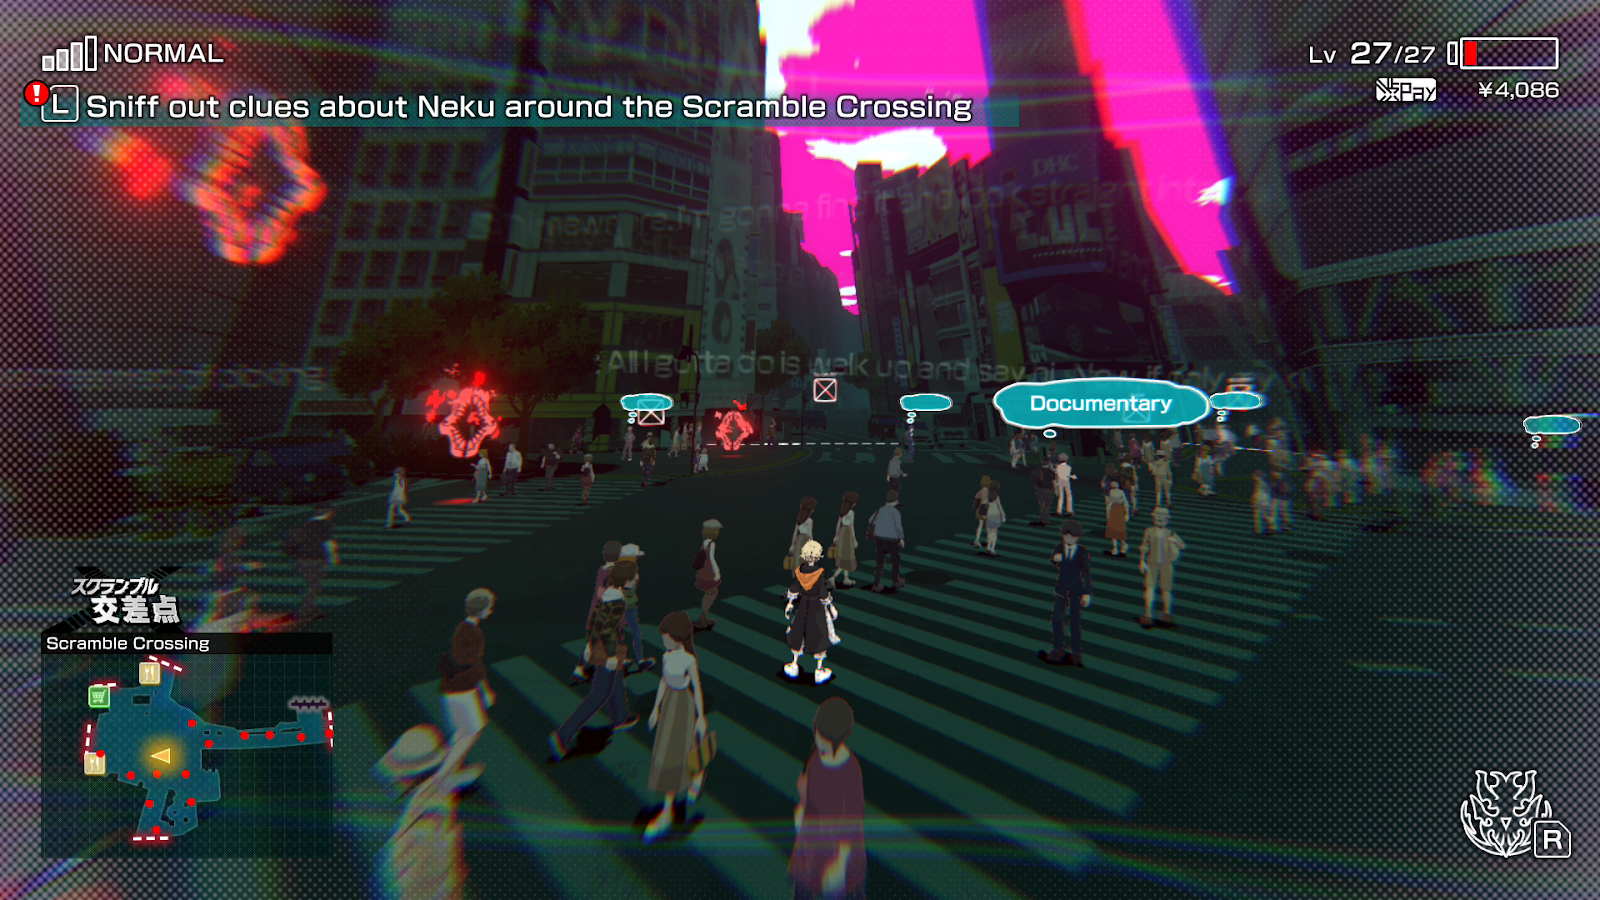 So many fights just waiting to happen.  (Screenshot: Square Enix / Kotaku)